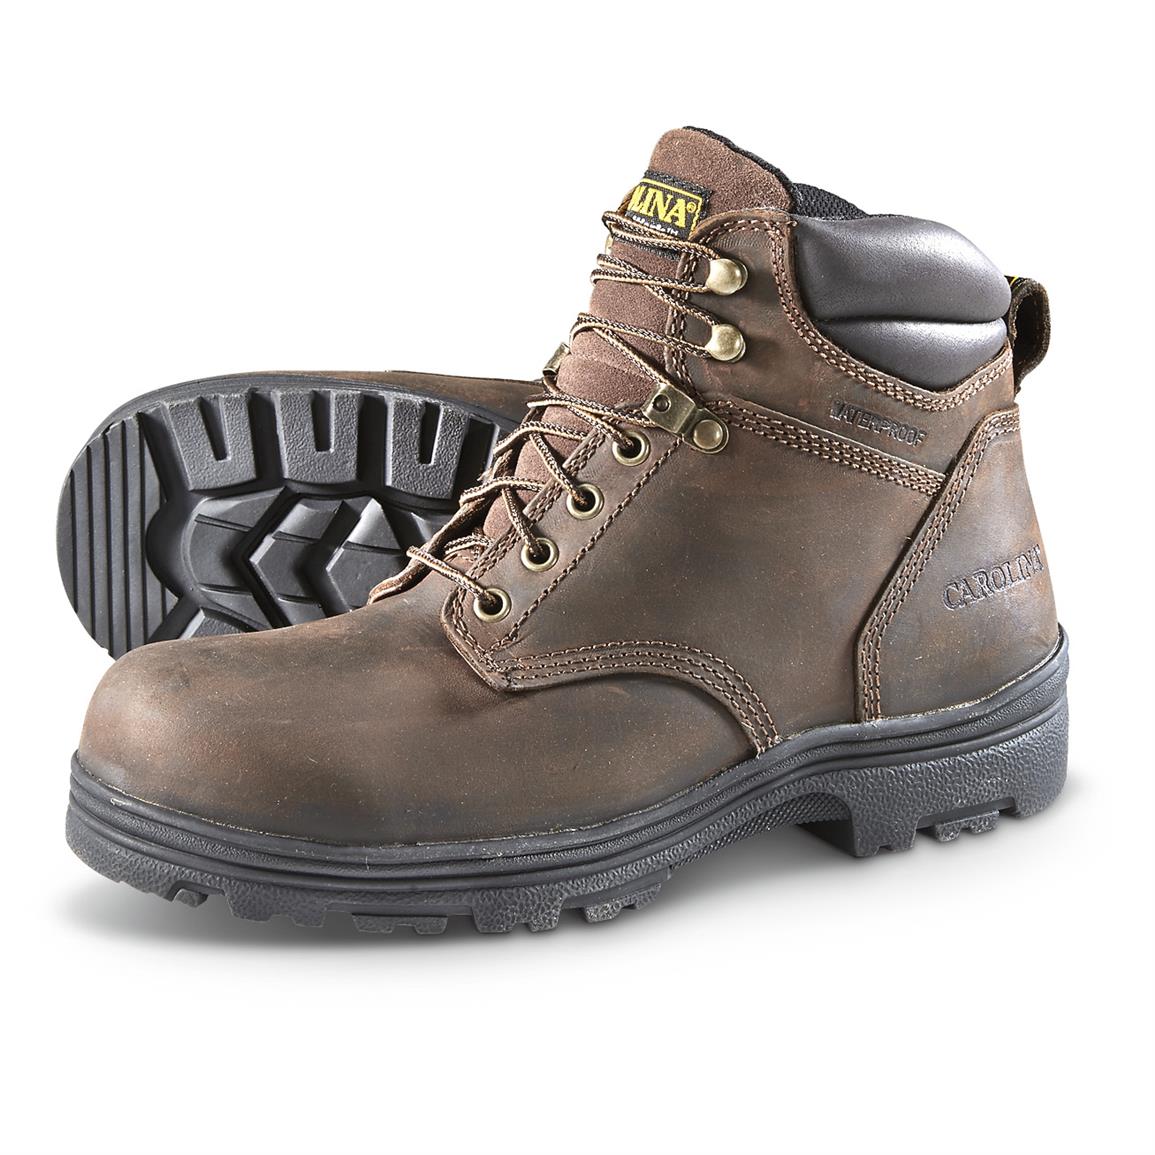 Carolina Men's Waterproof Steel Toe Work Boots - 645626, Work Boots at ...